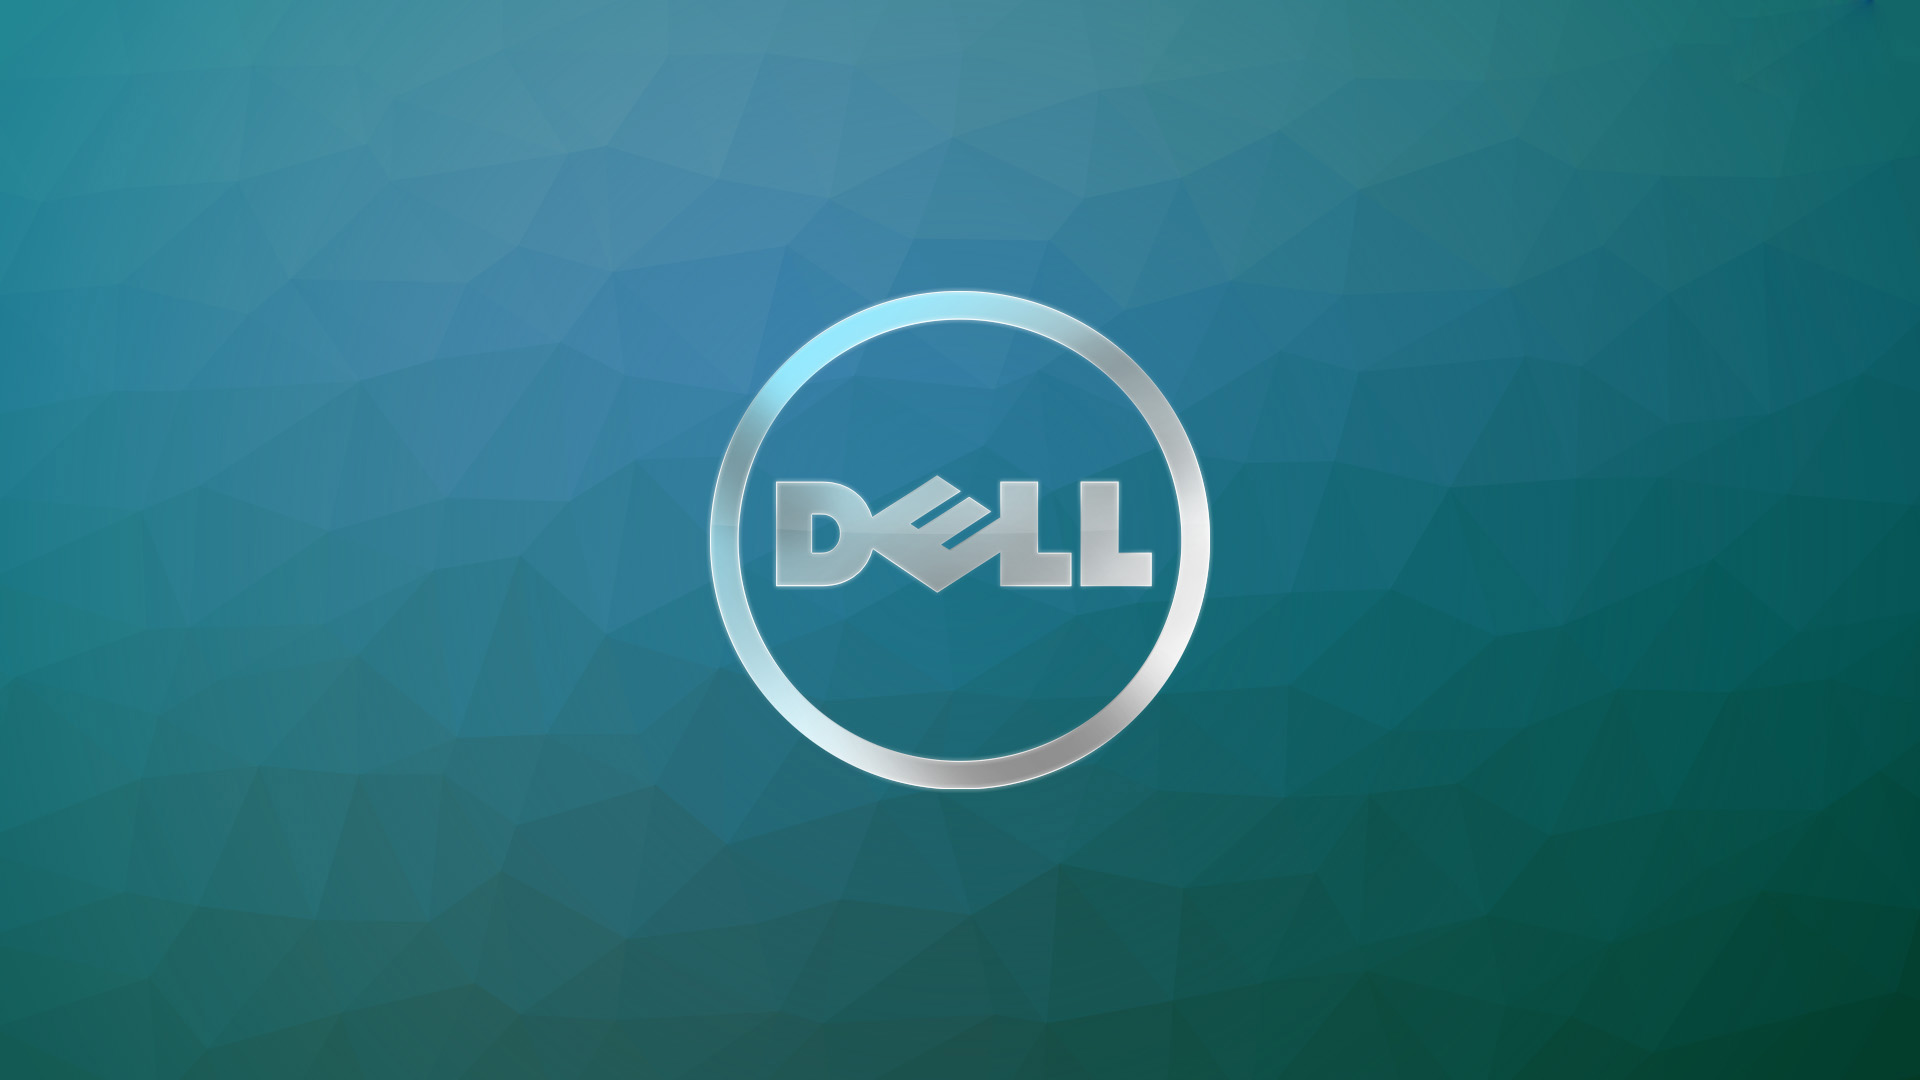 Dell Logo HD Wallpaper Wiki